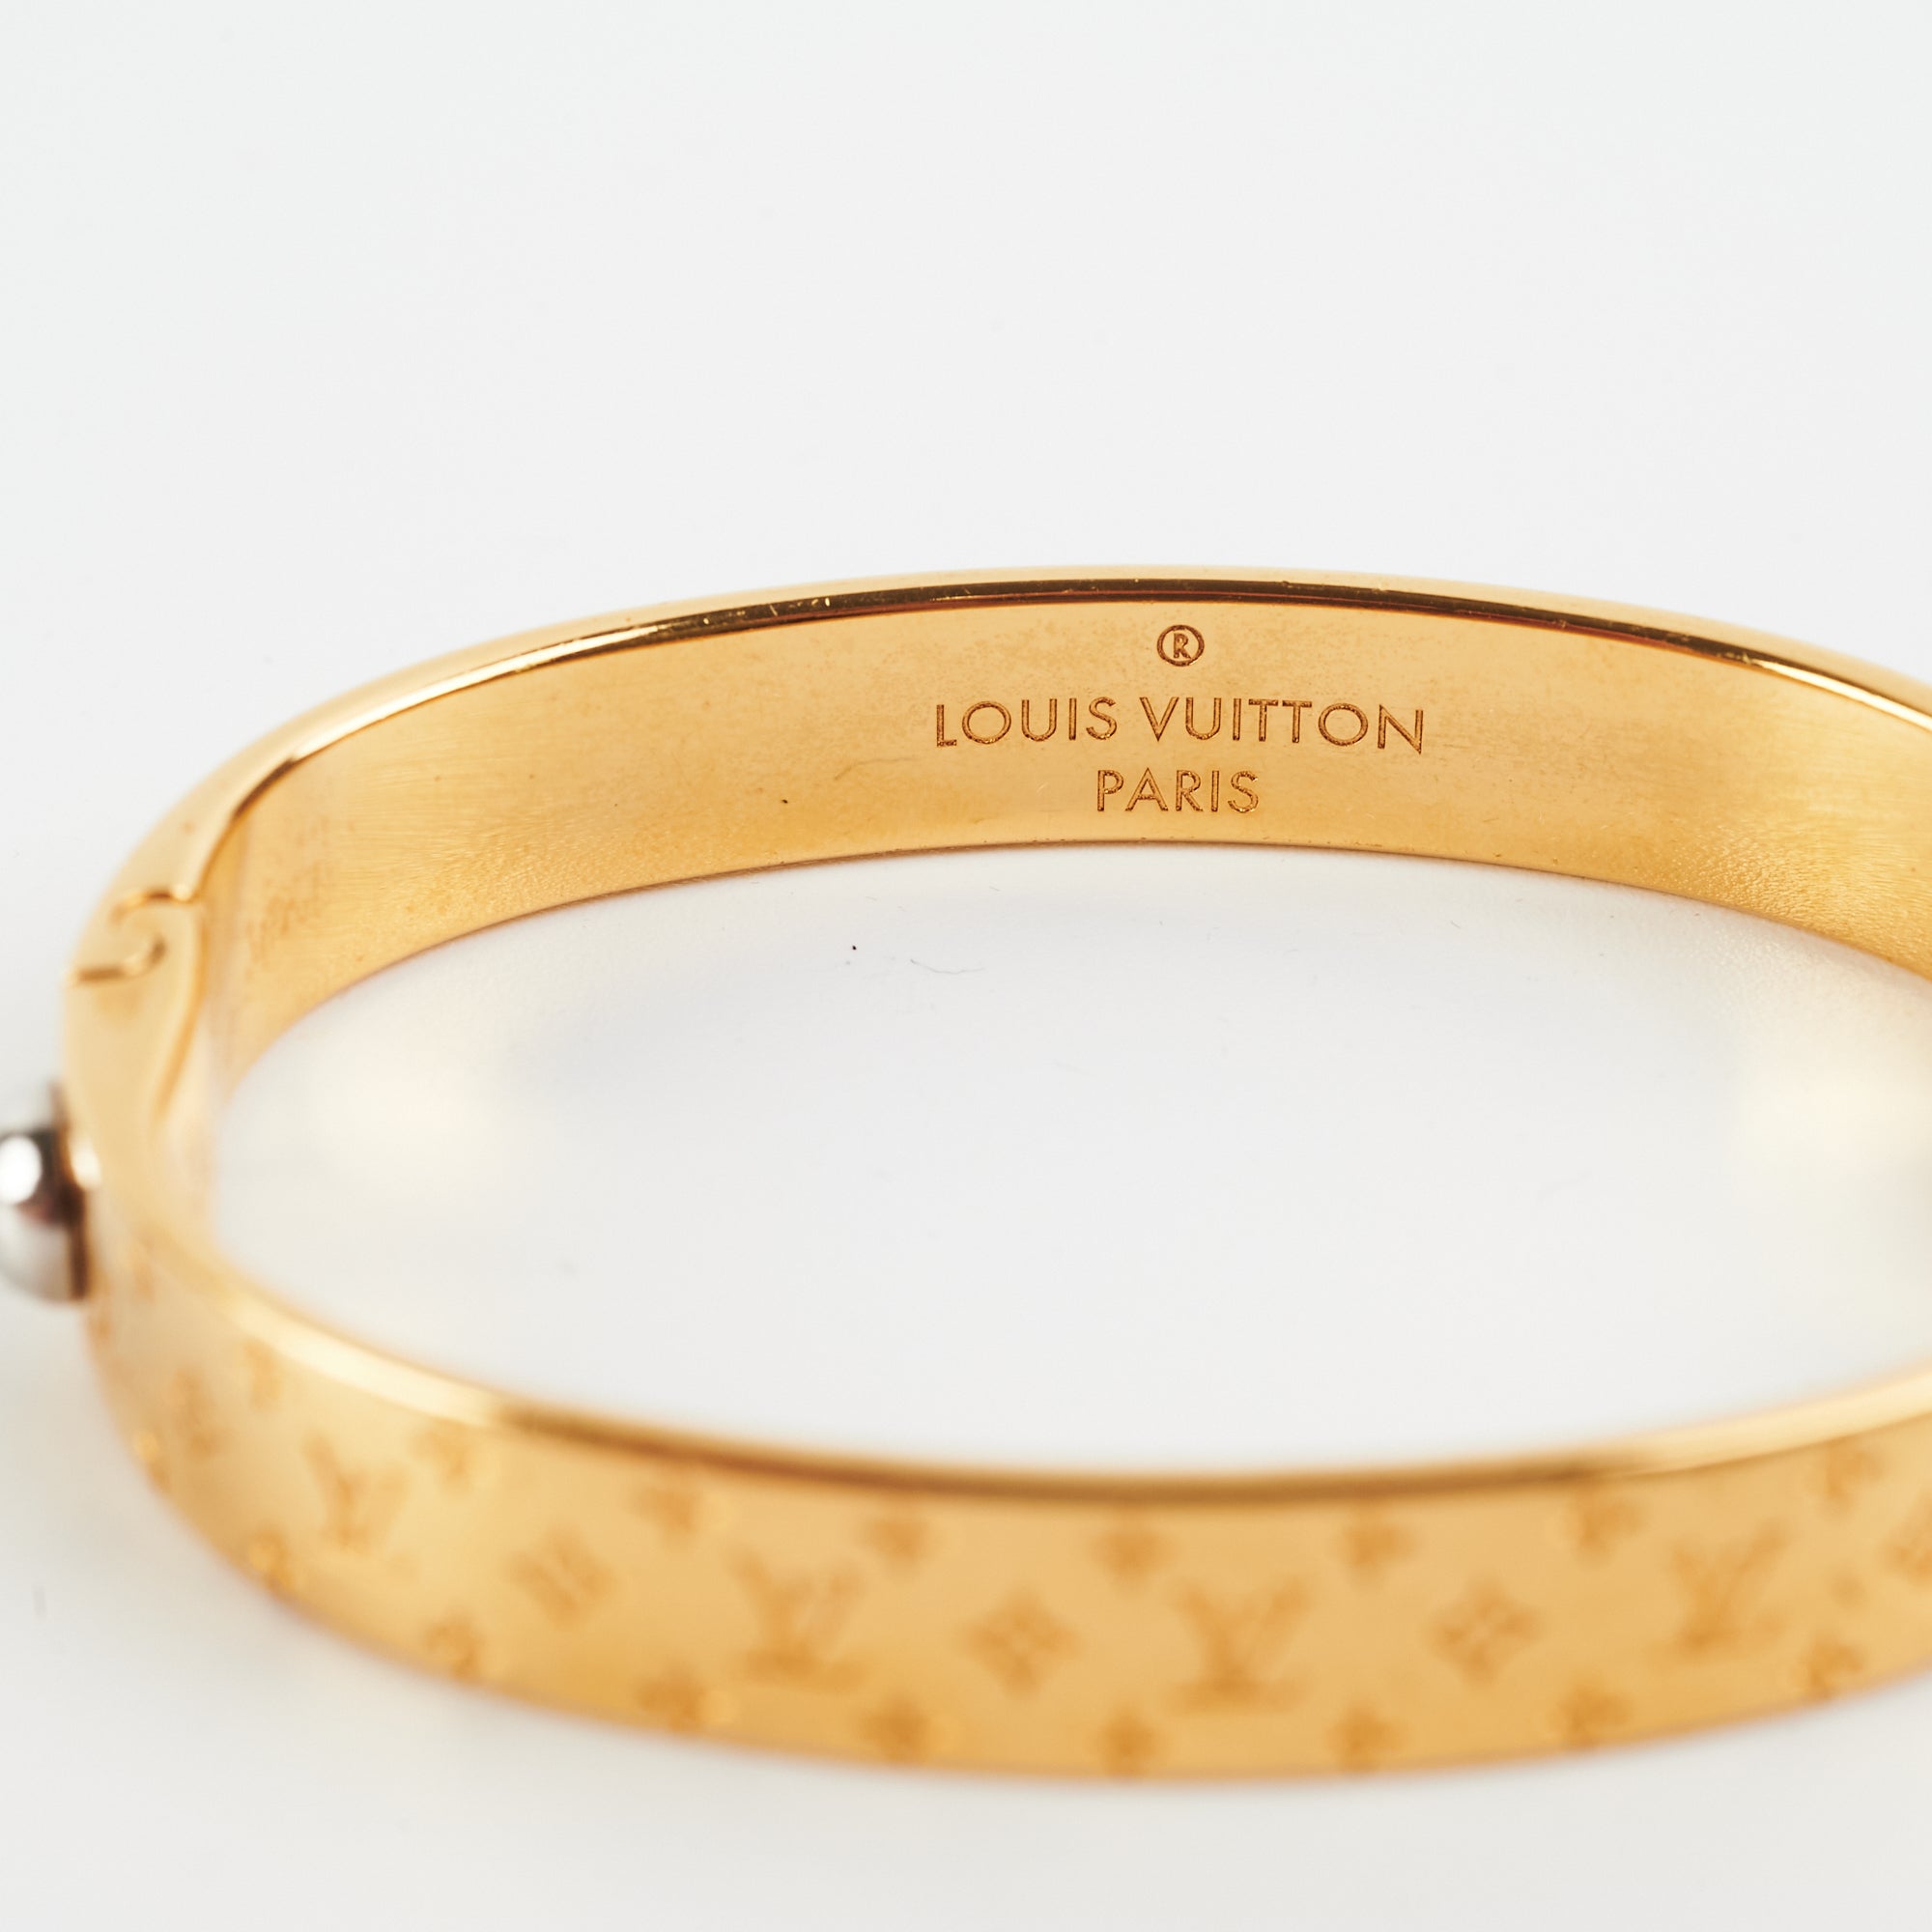 Shop Louis Vuitton Nanogram cuff (M00253) by えぷた